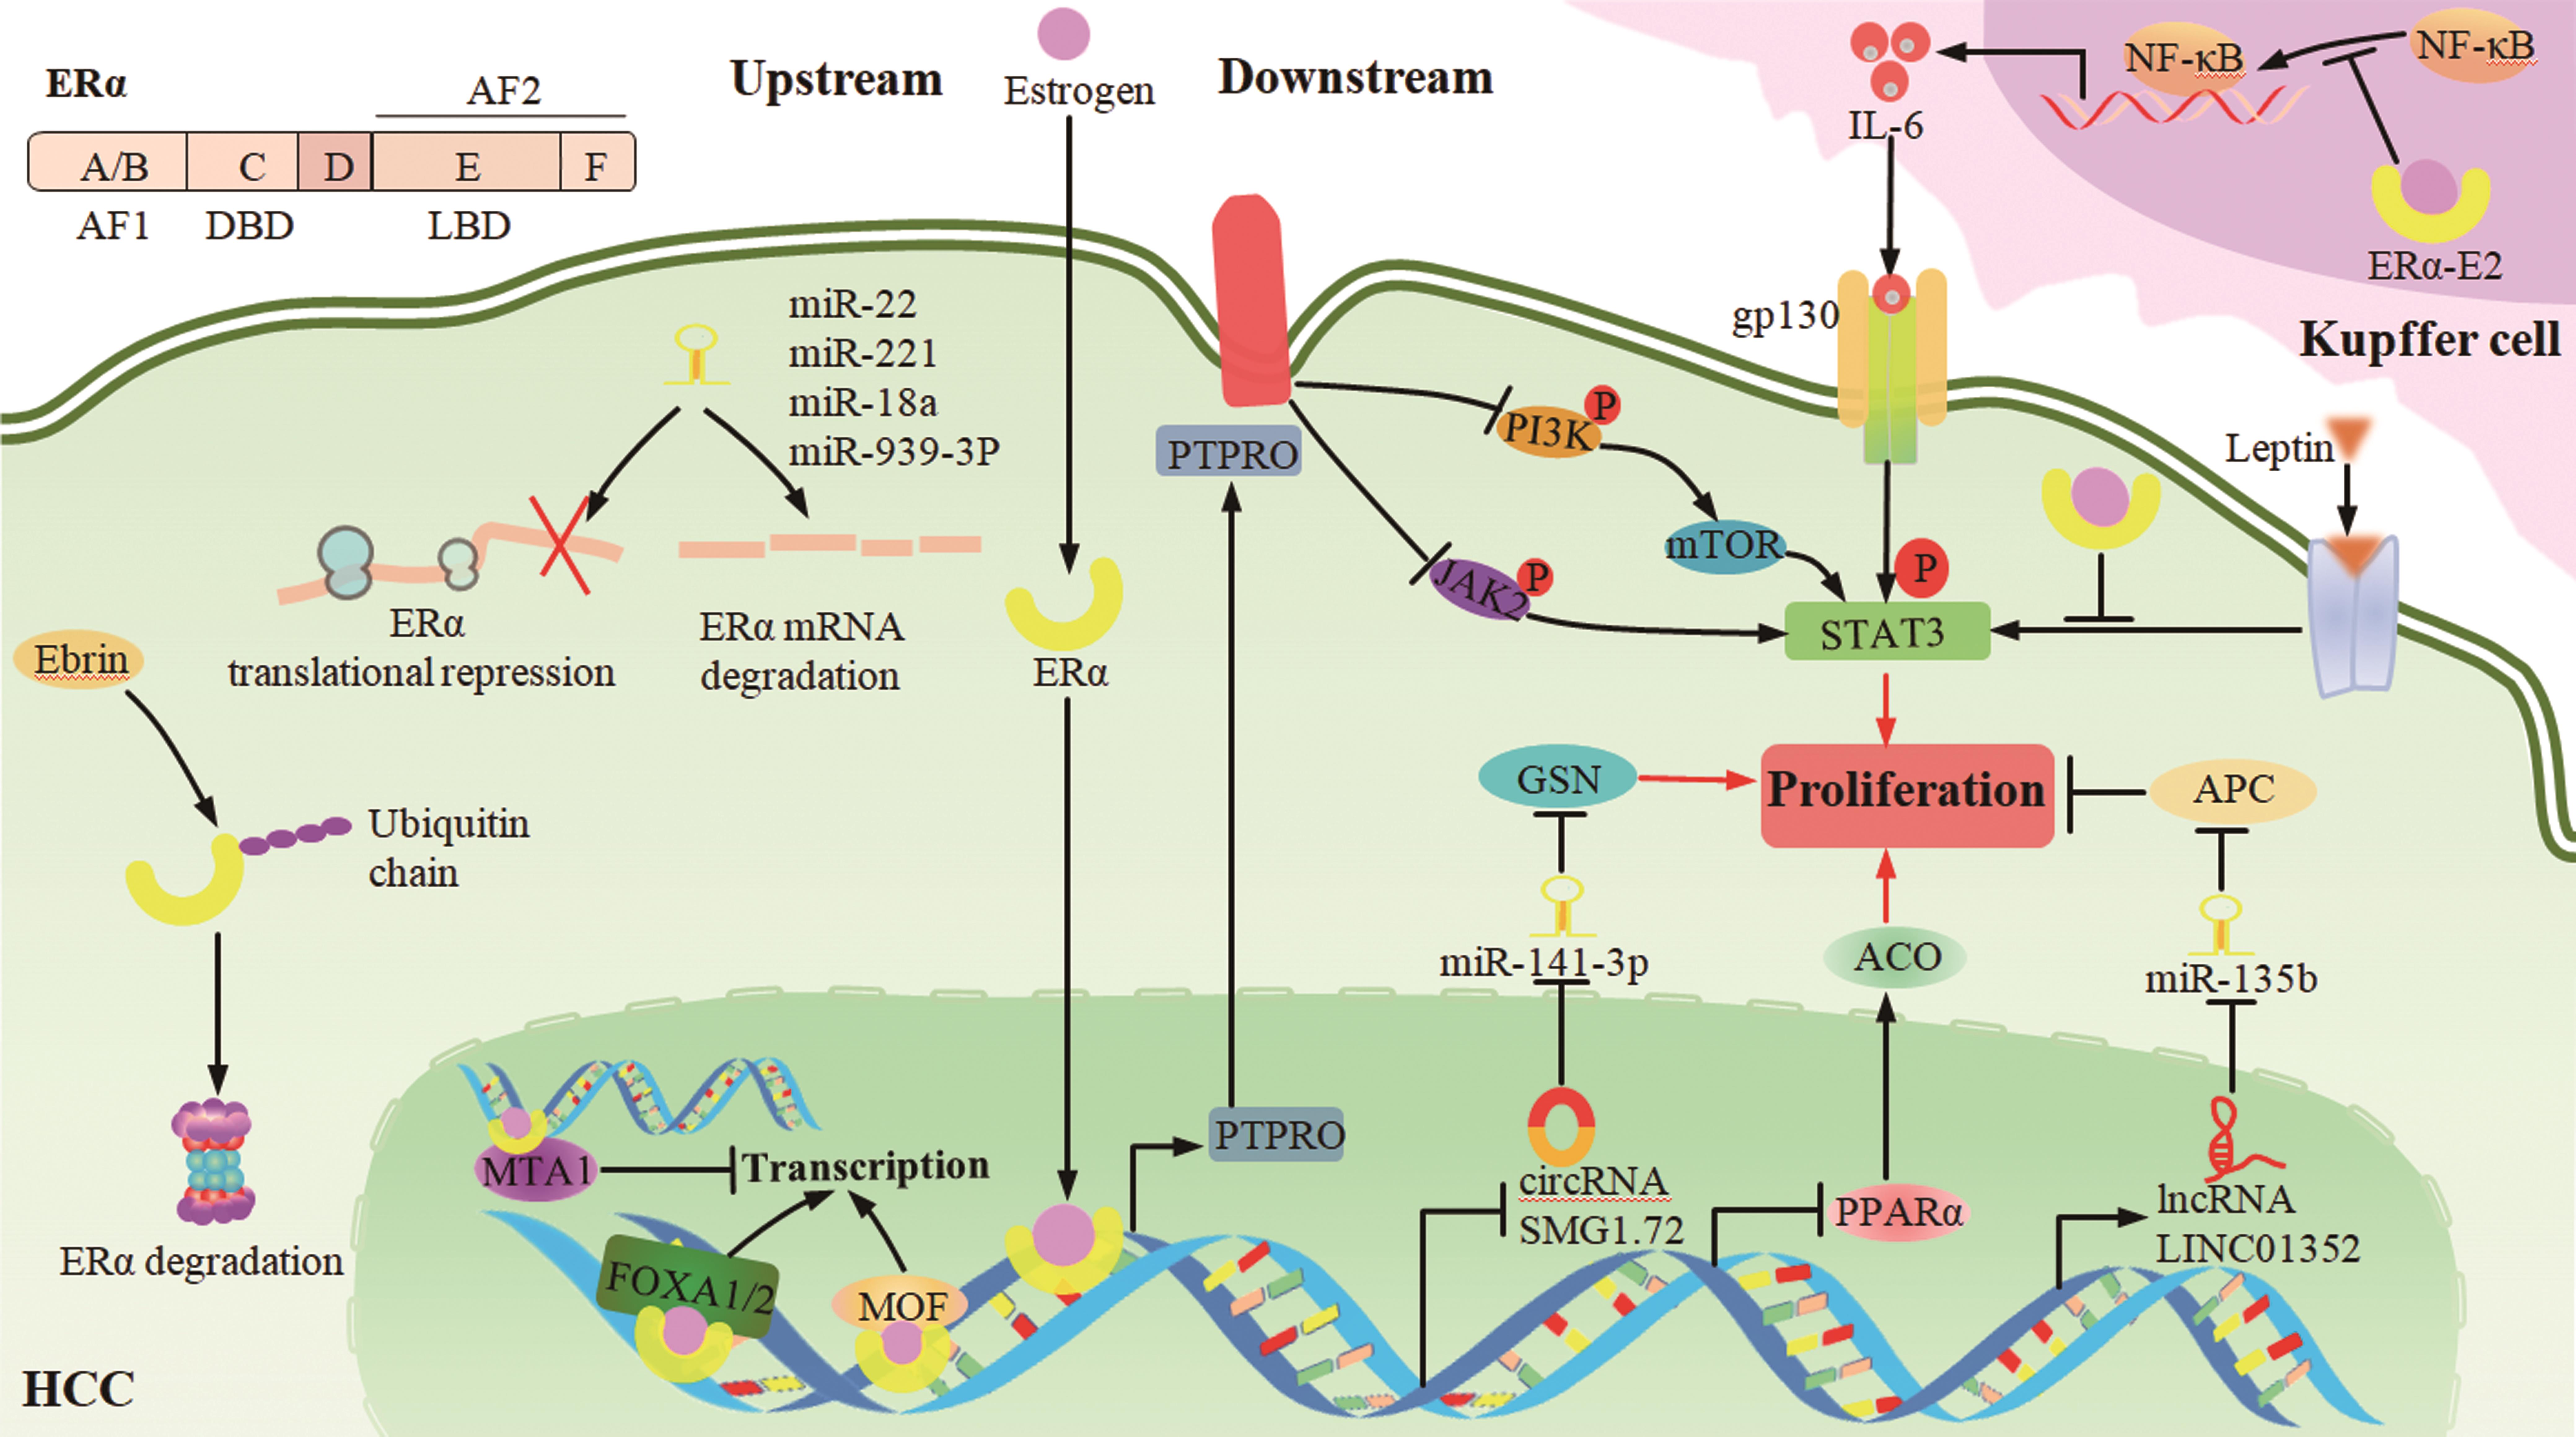 Signaling pathways of ERα involved in HCC.